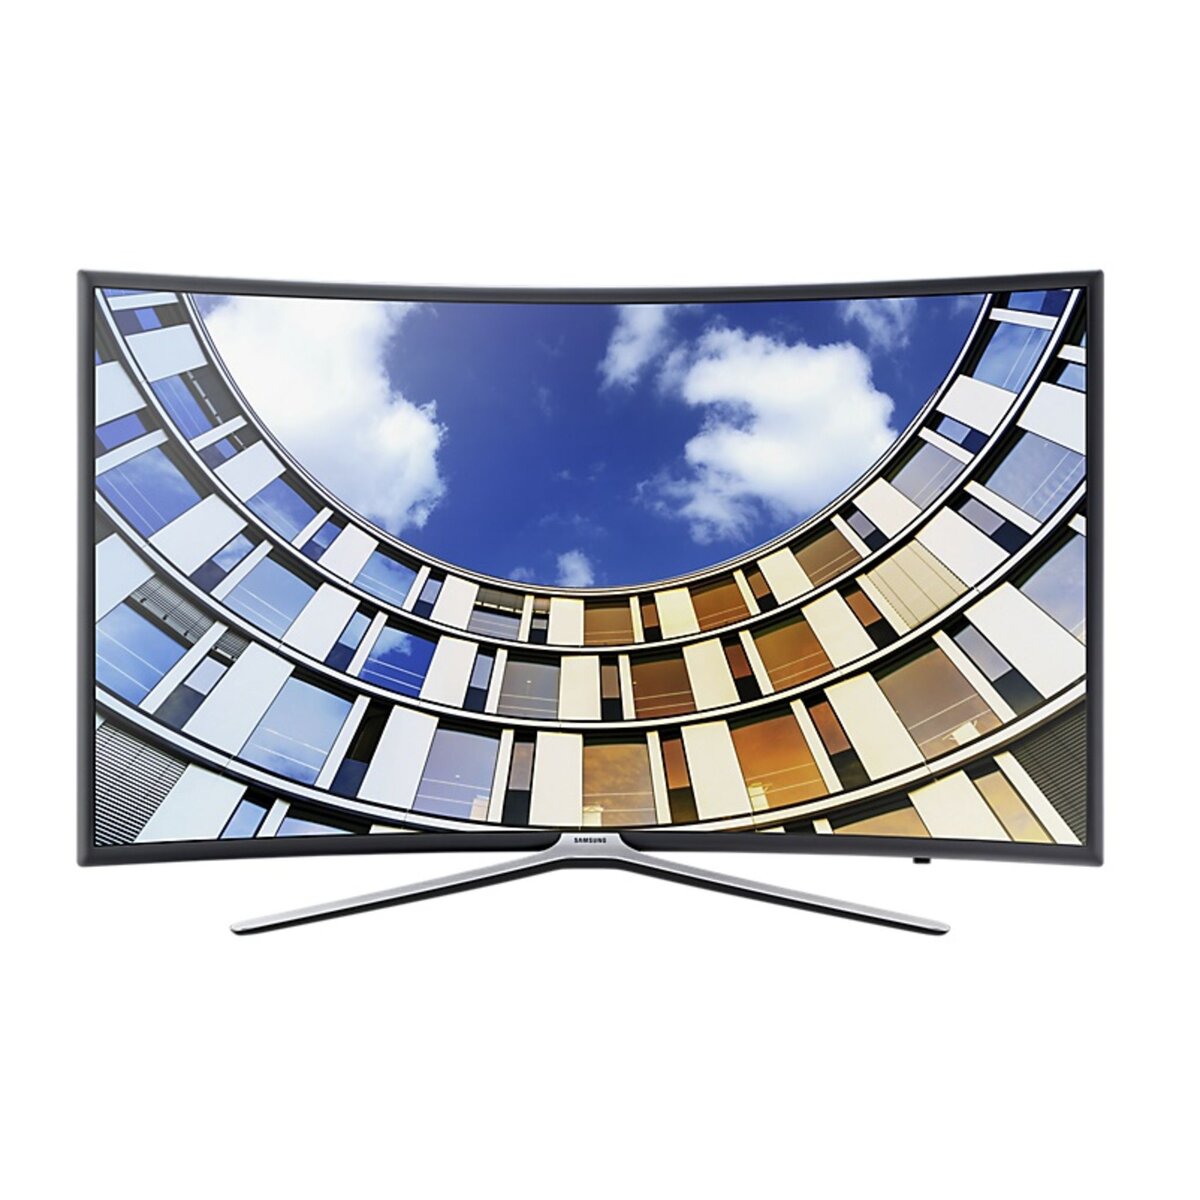 SAMSUNG UE49M6305 TV LED Full HD 123 cm  Incurvé Smart TV